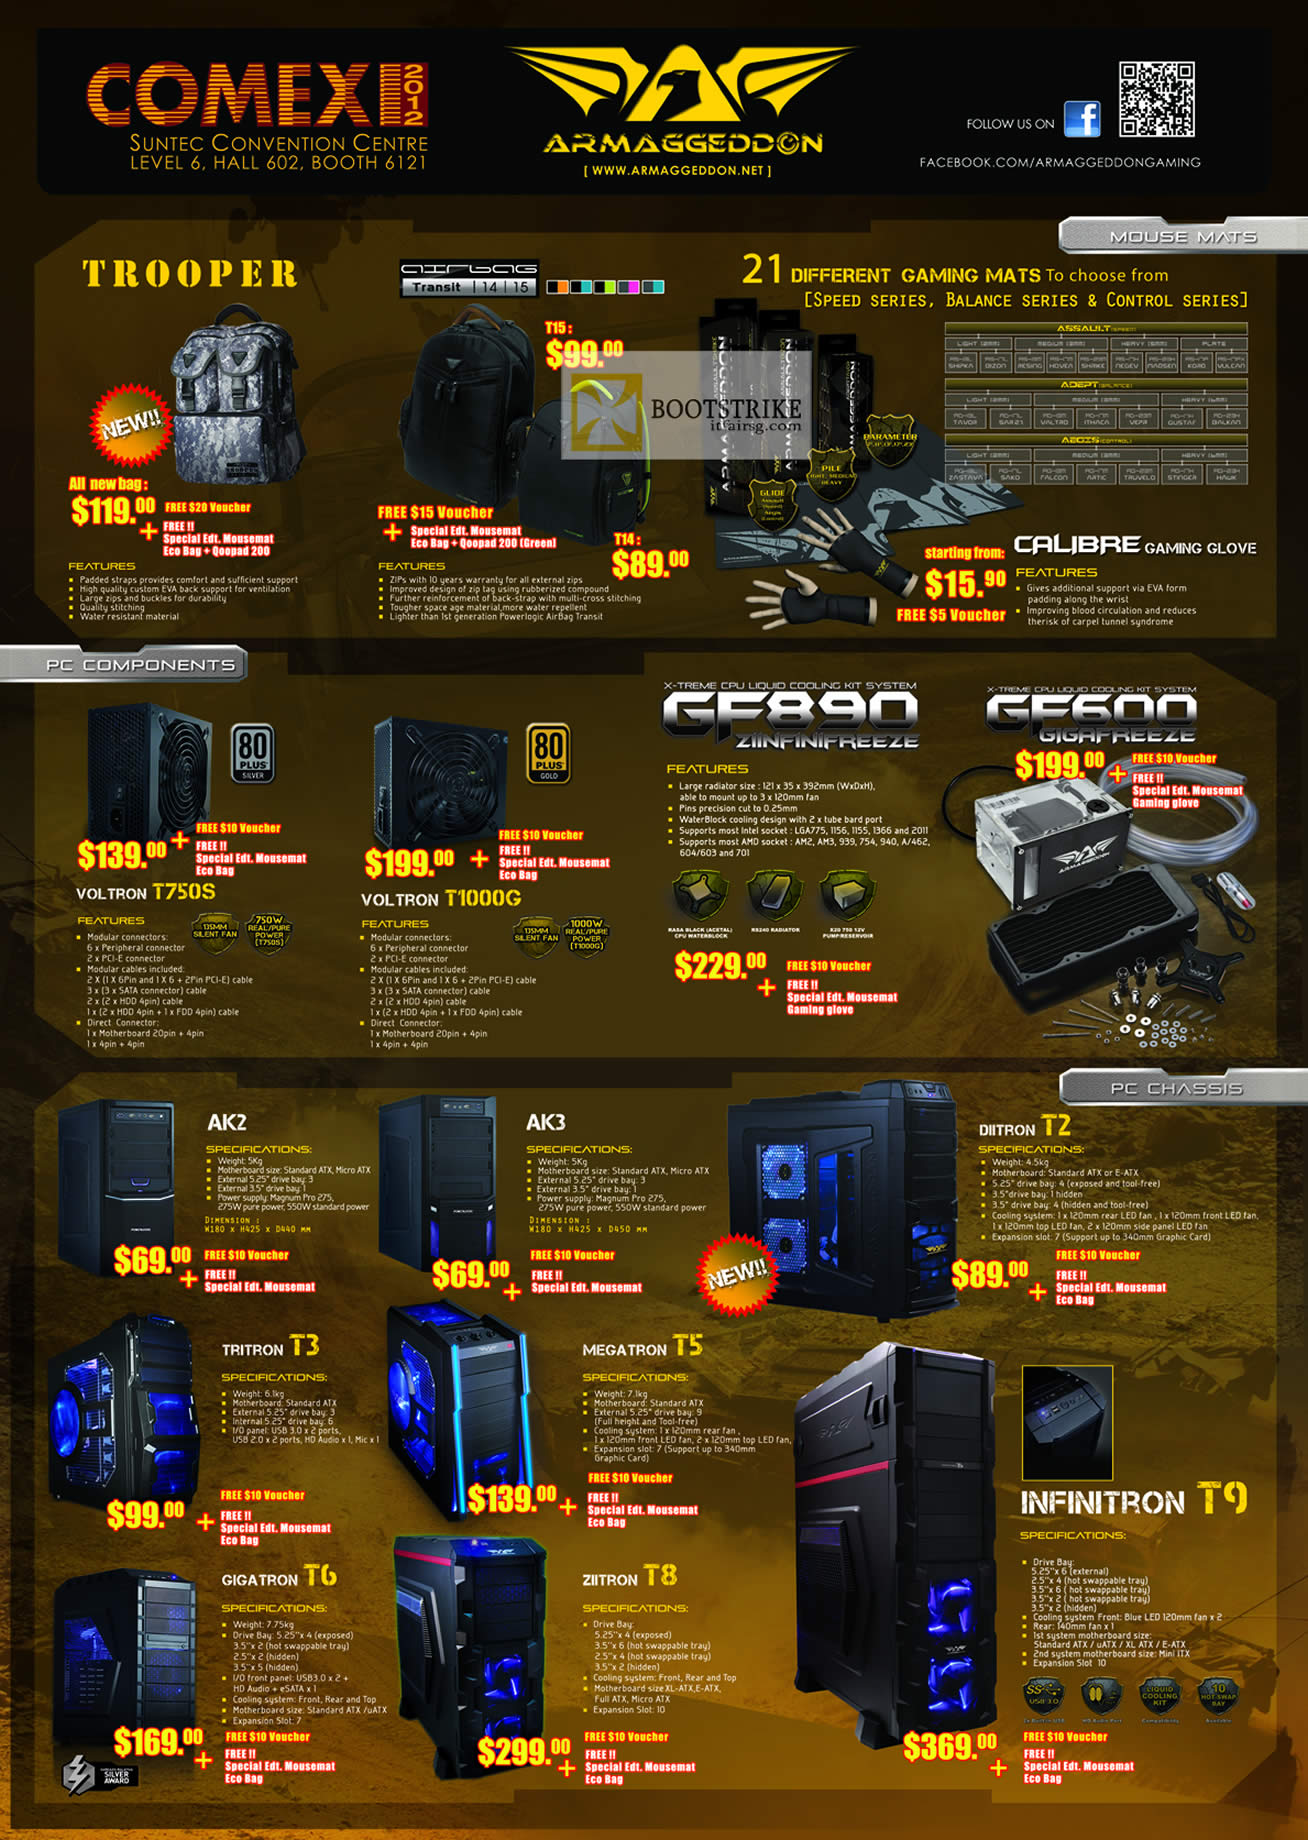 COMEX 2012 price list image brochure of Leap Frog Armaggeddon Trooper Bag, Gaming Mats, Voltron Case T750S T1000G, Cooling Kits, PC Chassis AK2, AK3, Triton T3, Megatron T5, Infinitron T9